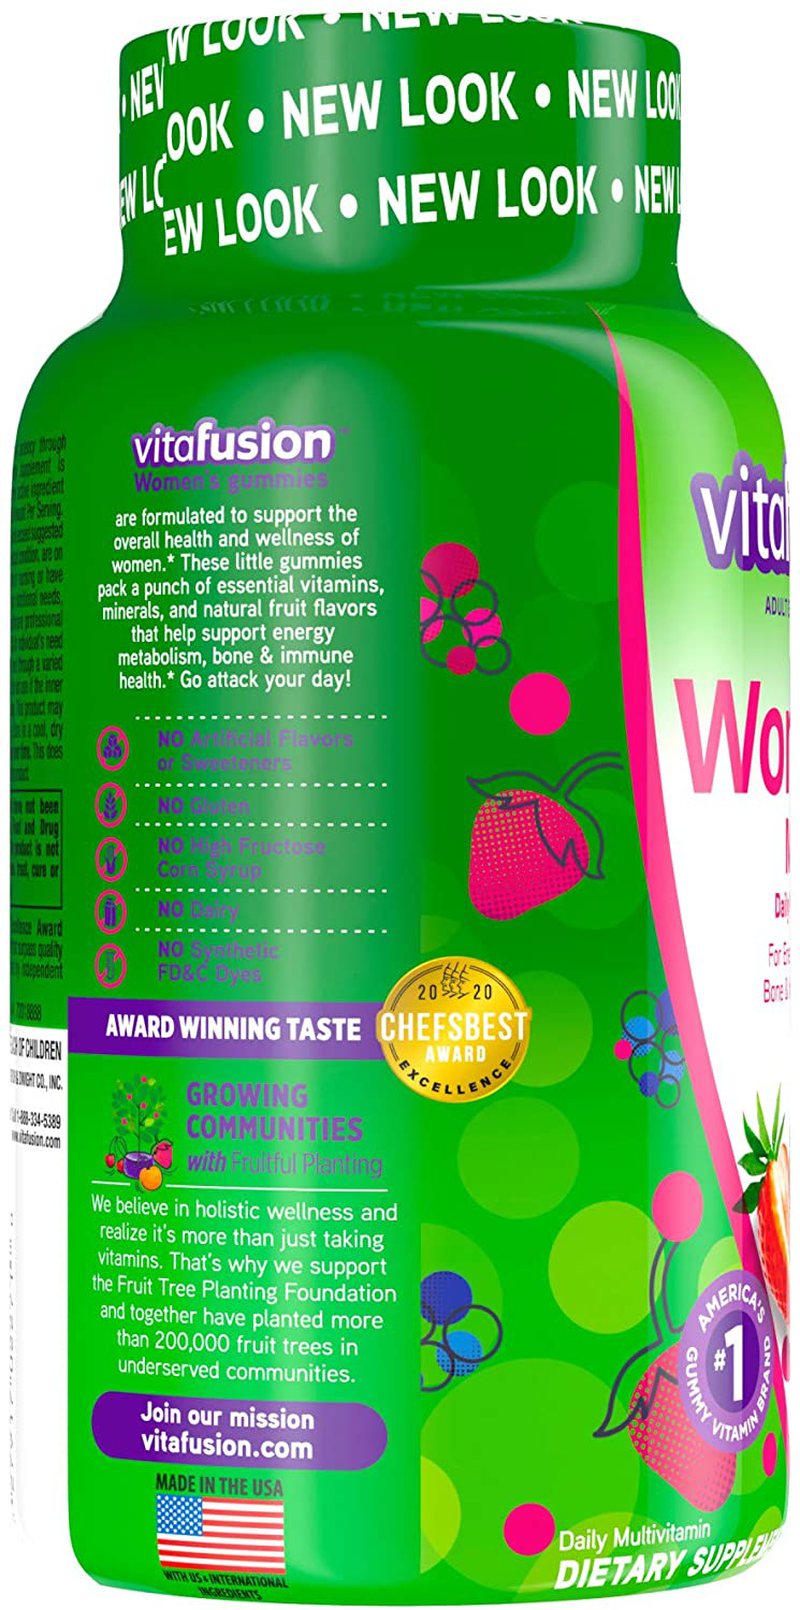 Vitafusion Women's Gummy Vitamins, Mixed Berries, 150 Count